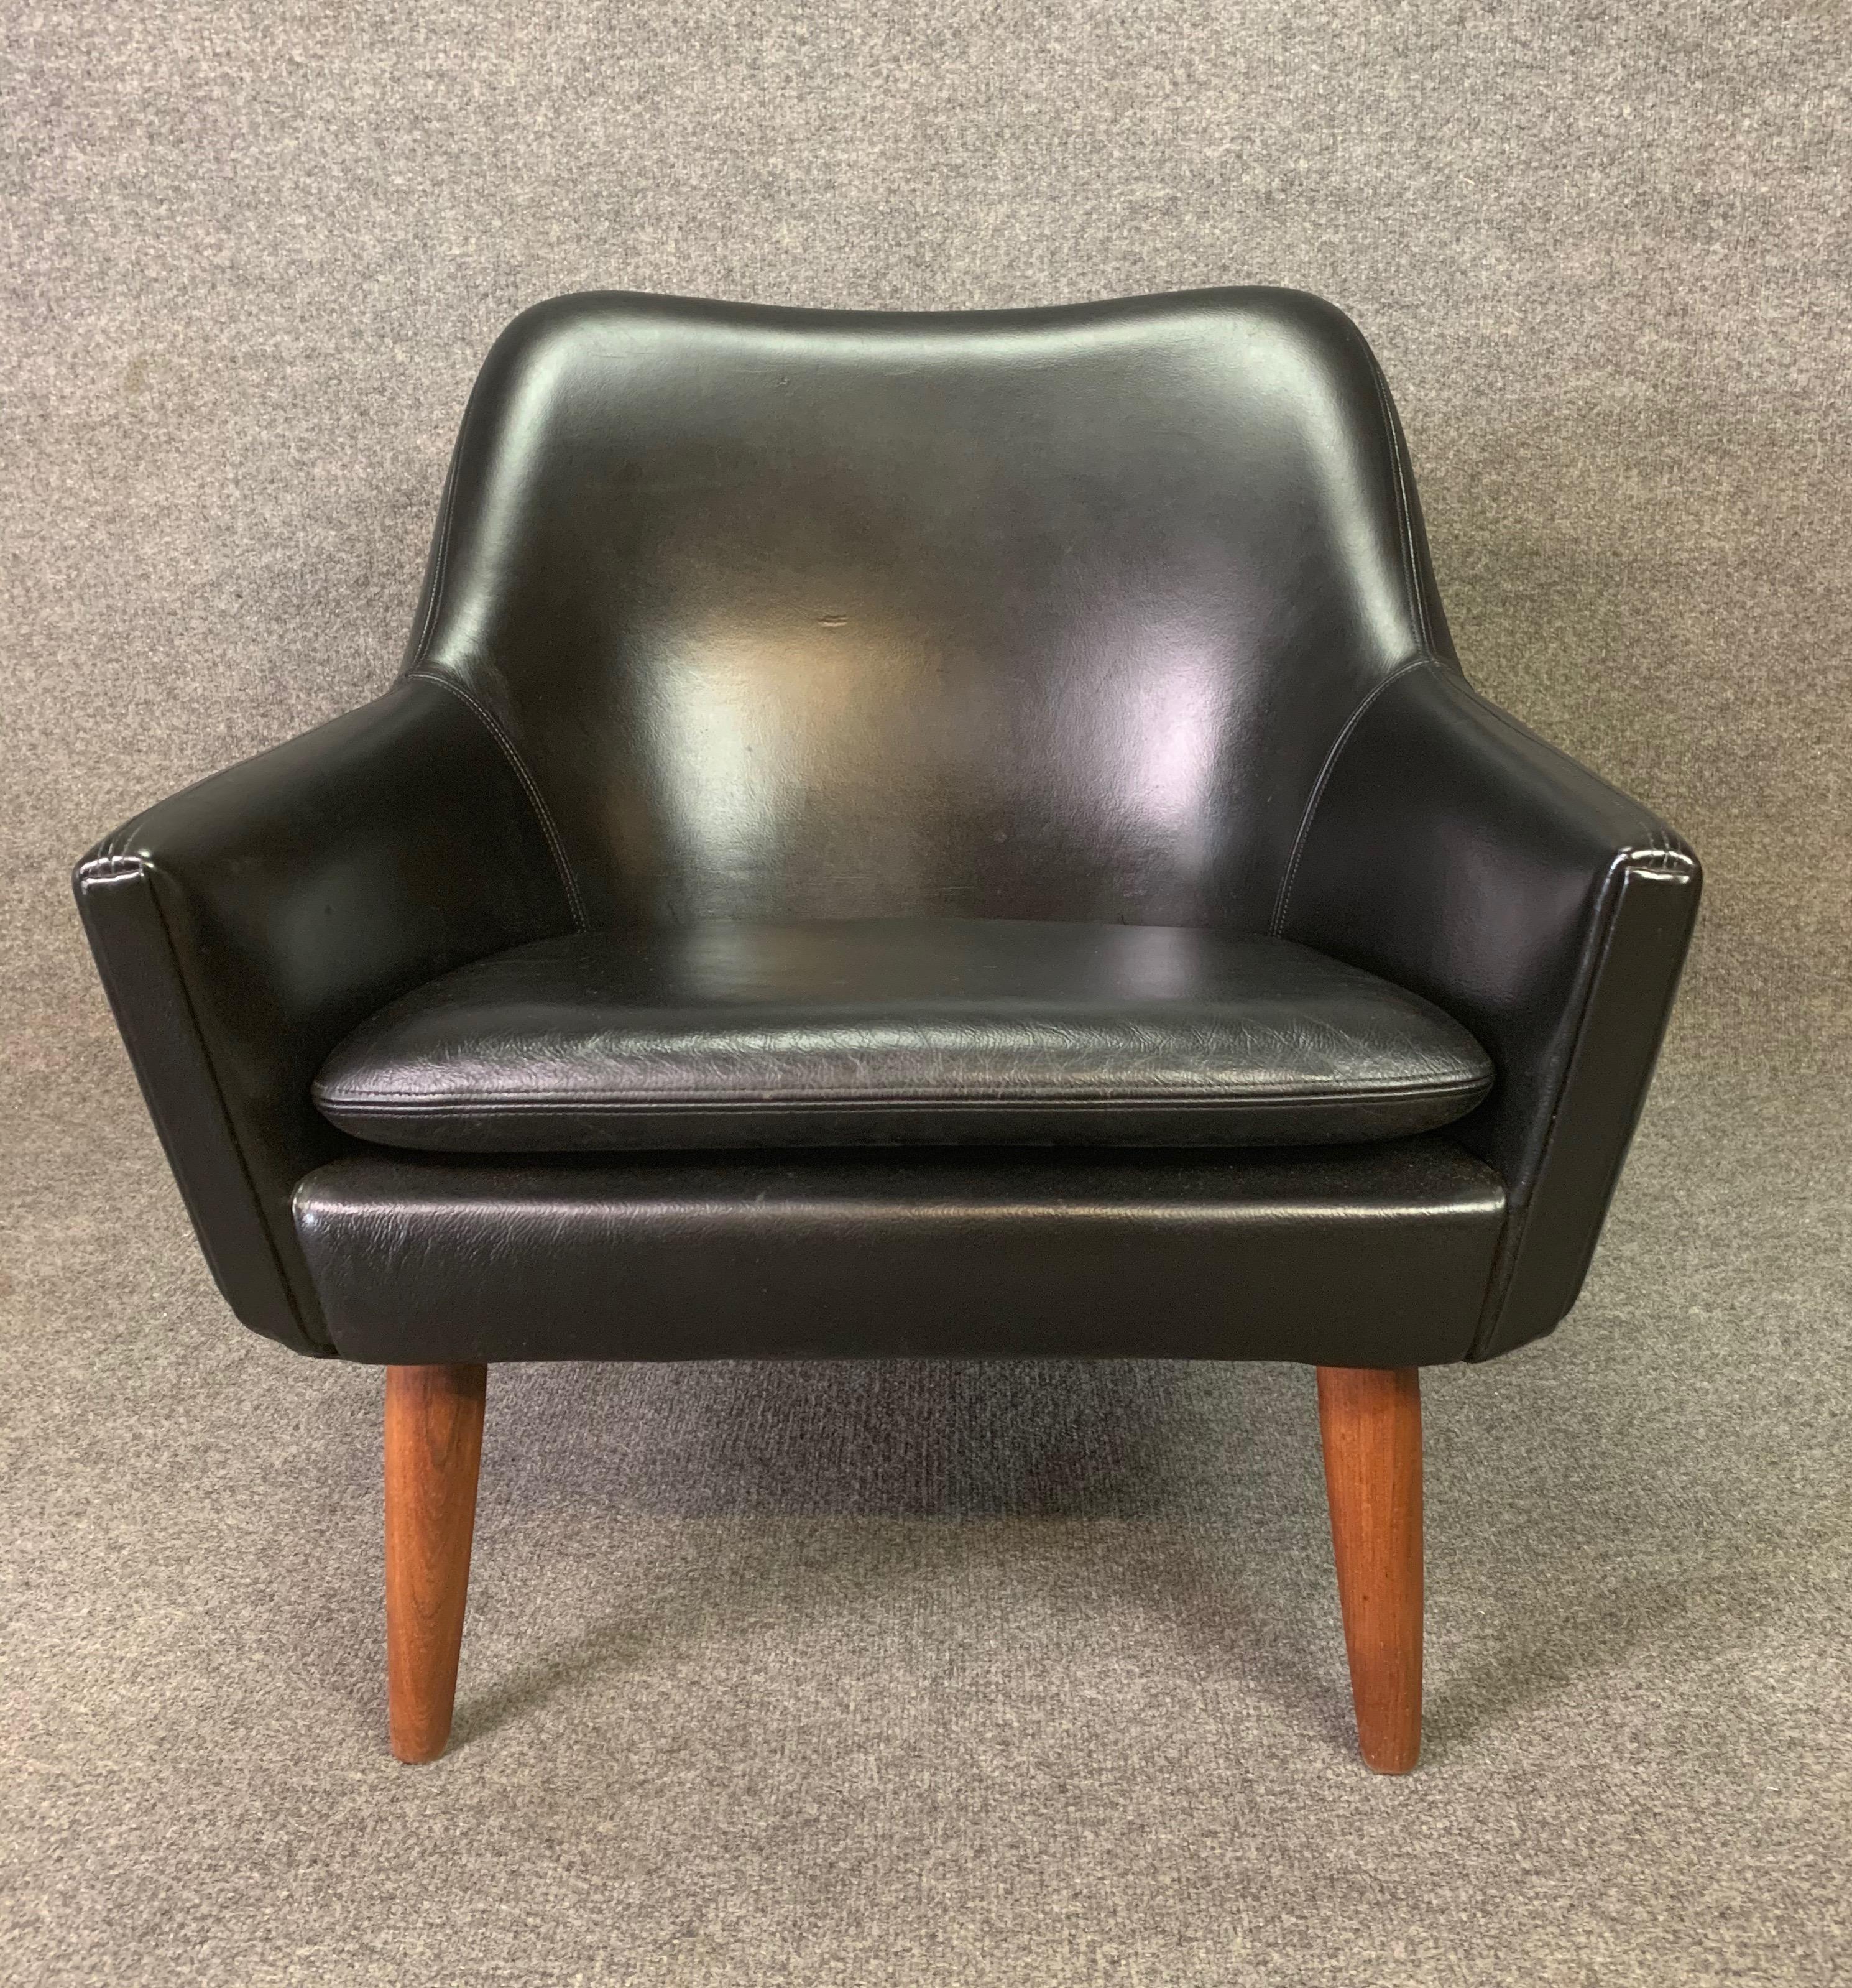 Scandinavian Modern Vintage Danish Mid-Century Modern Leather and Teak Lounge Chair For Sale